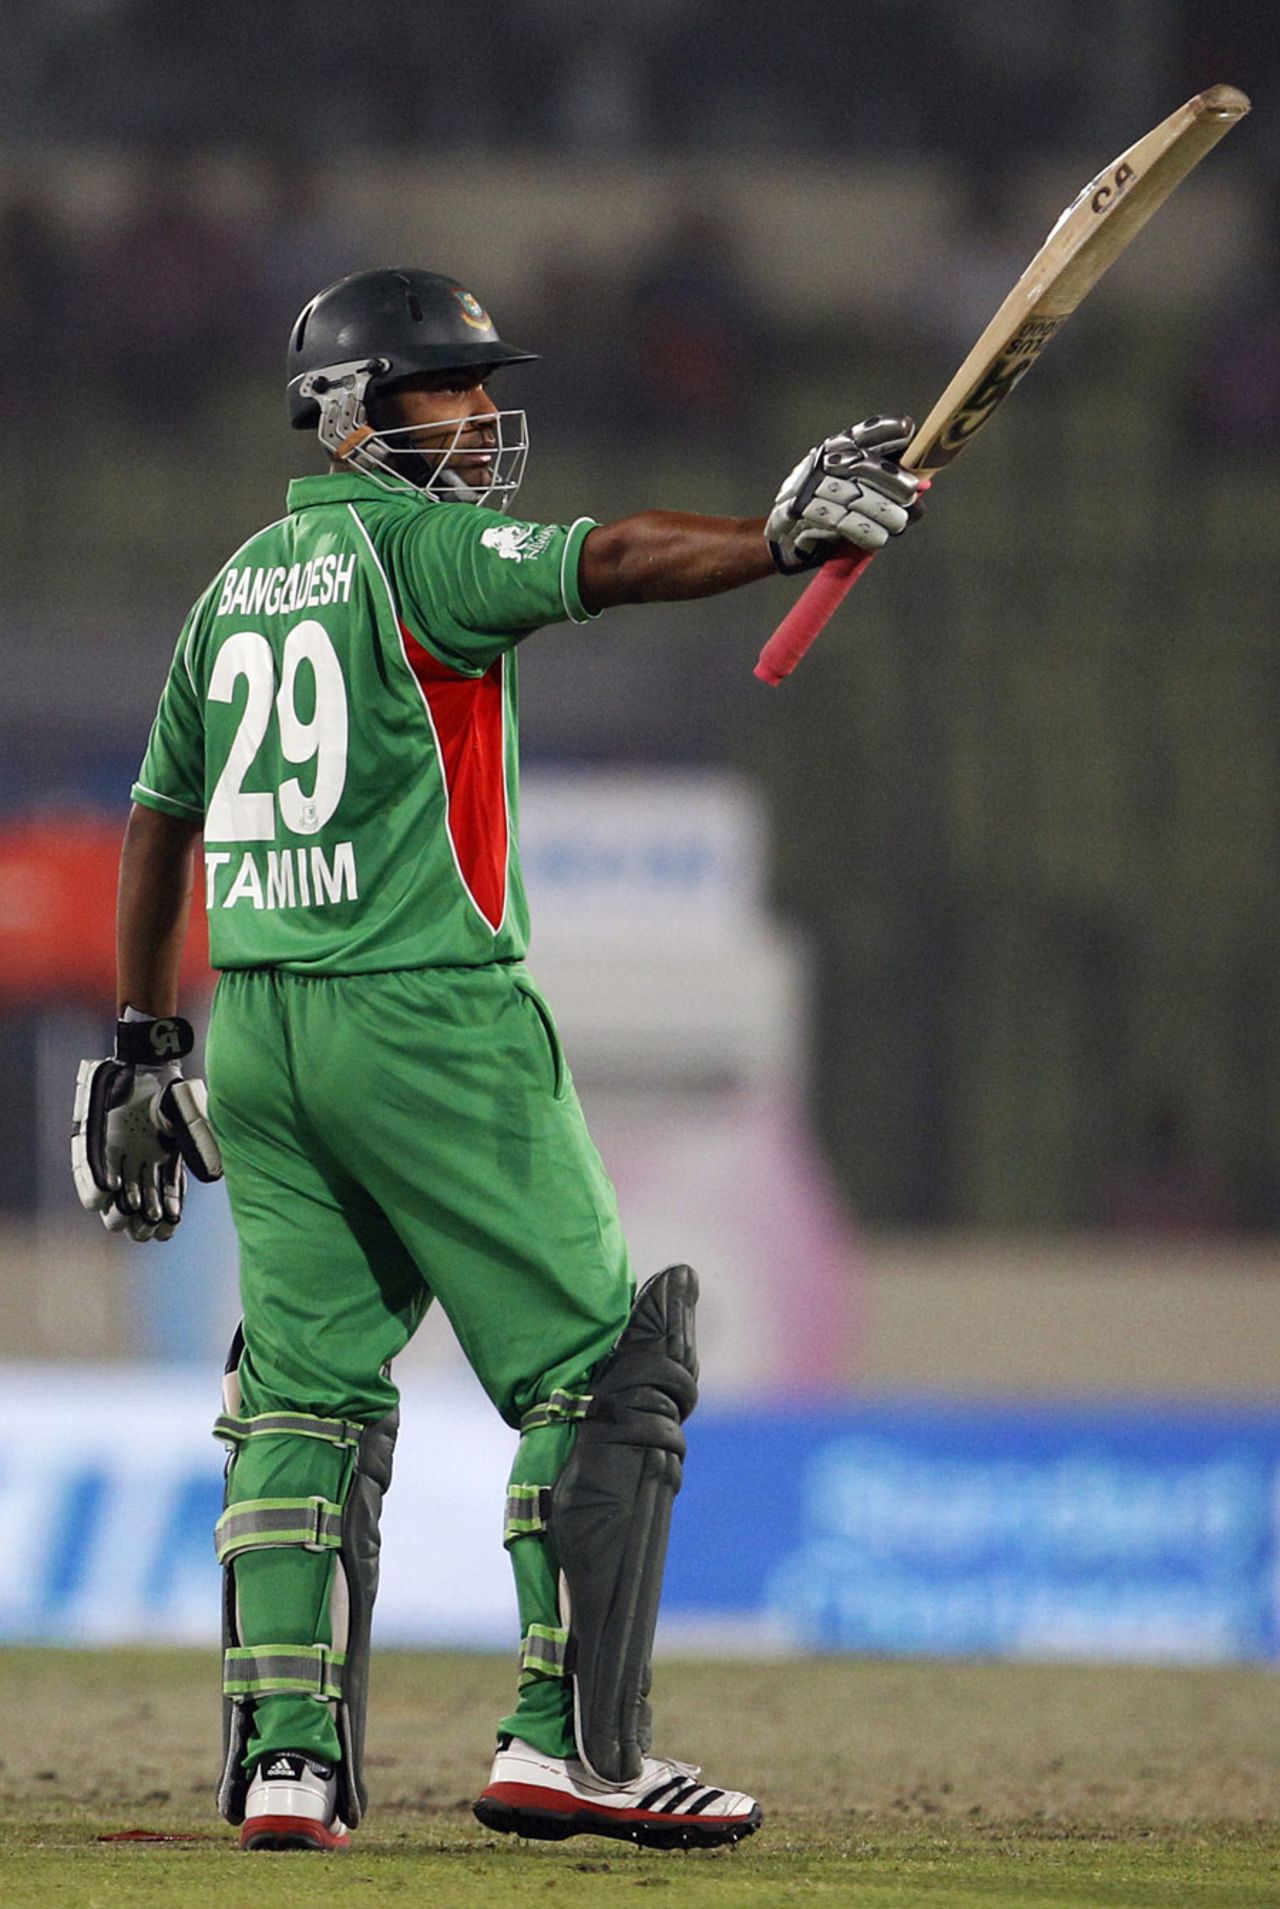 Tamim Iqbal raises his bat after reaching a half-century, Bangladesh v Pakistan, Asia Cup, Mirpur, March 11, 2012